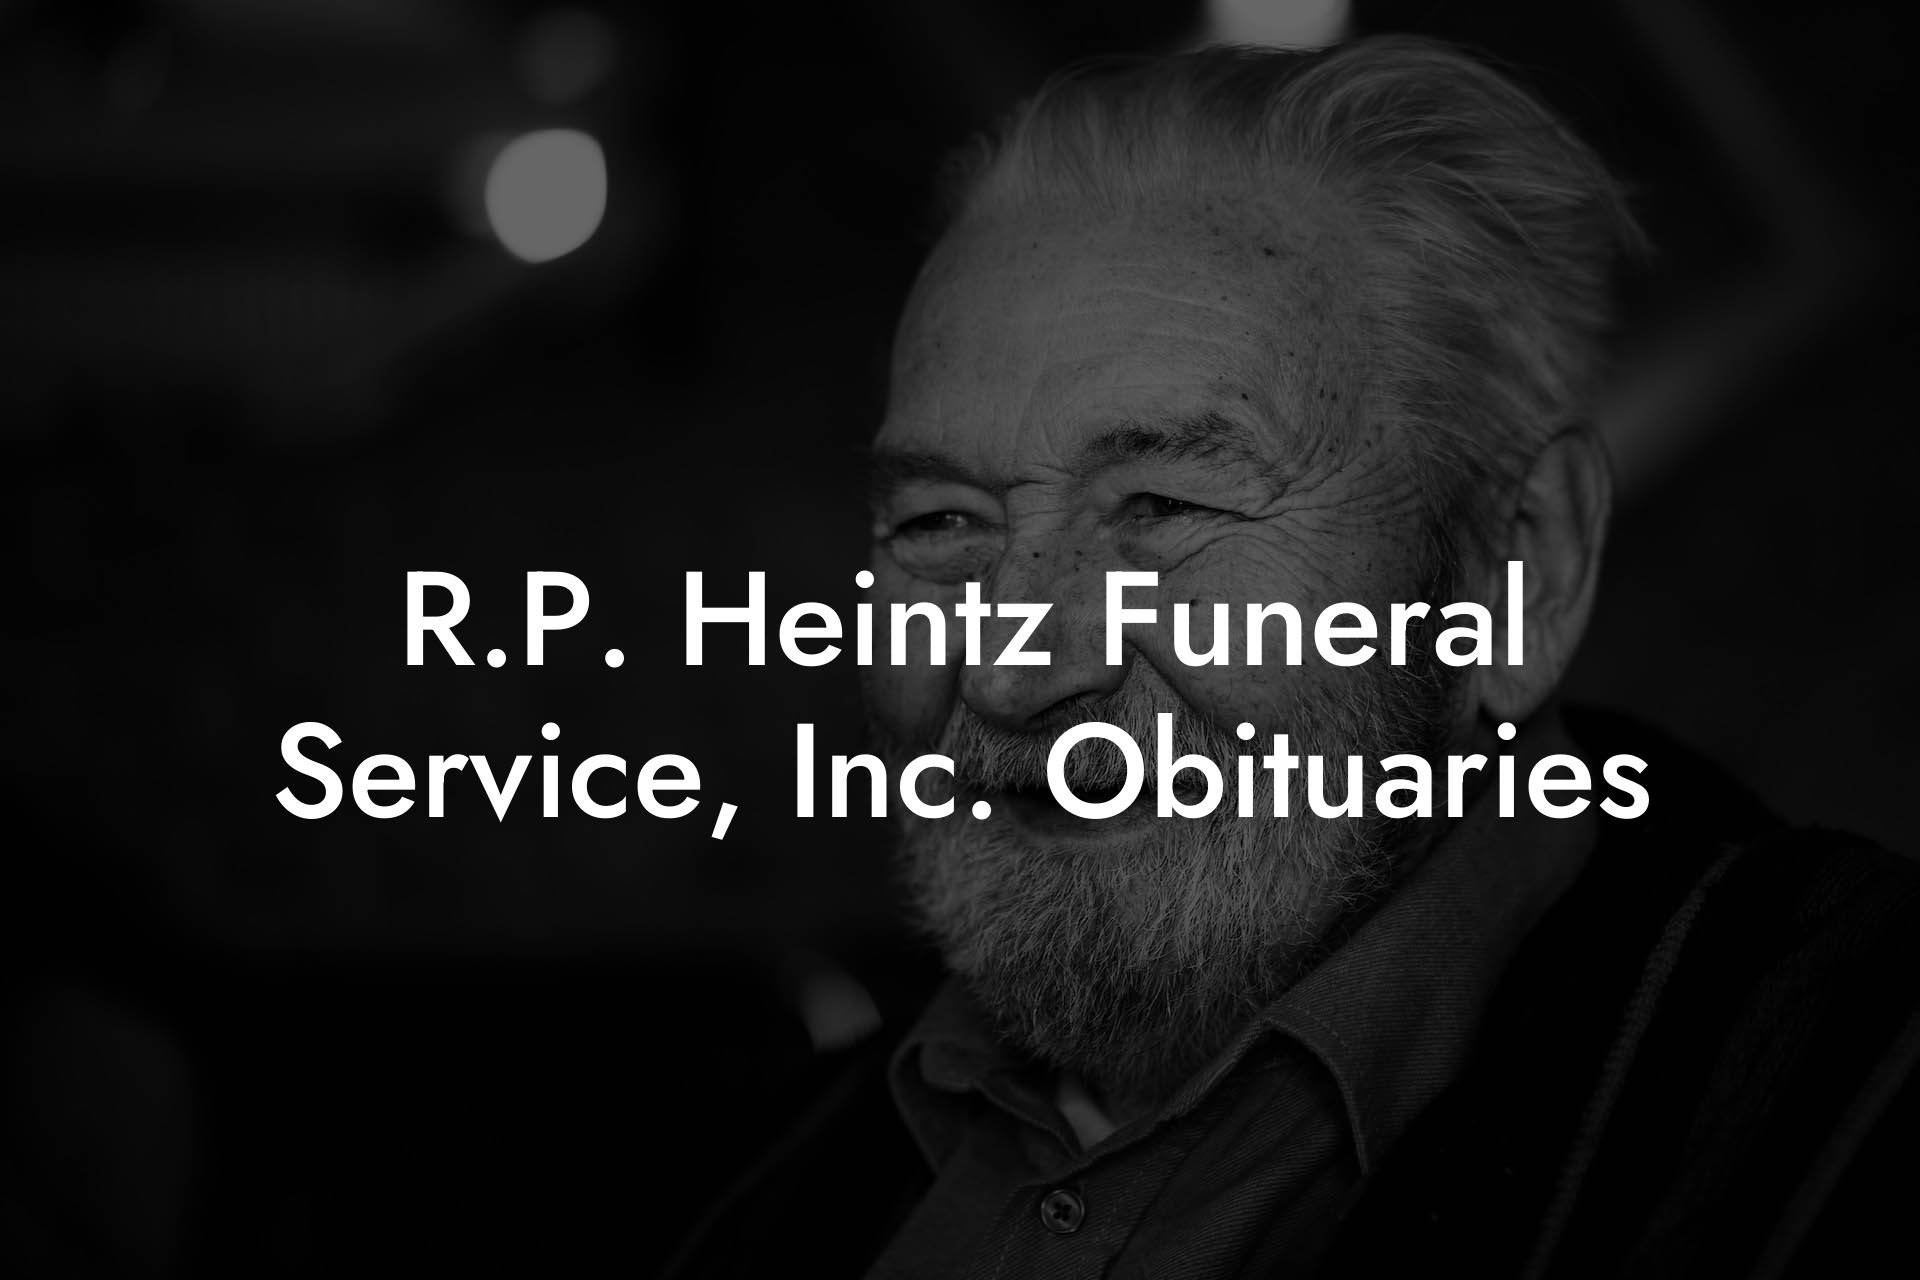 R.P. Heintz Funeral Service, Inc. Obituaries